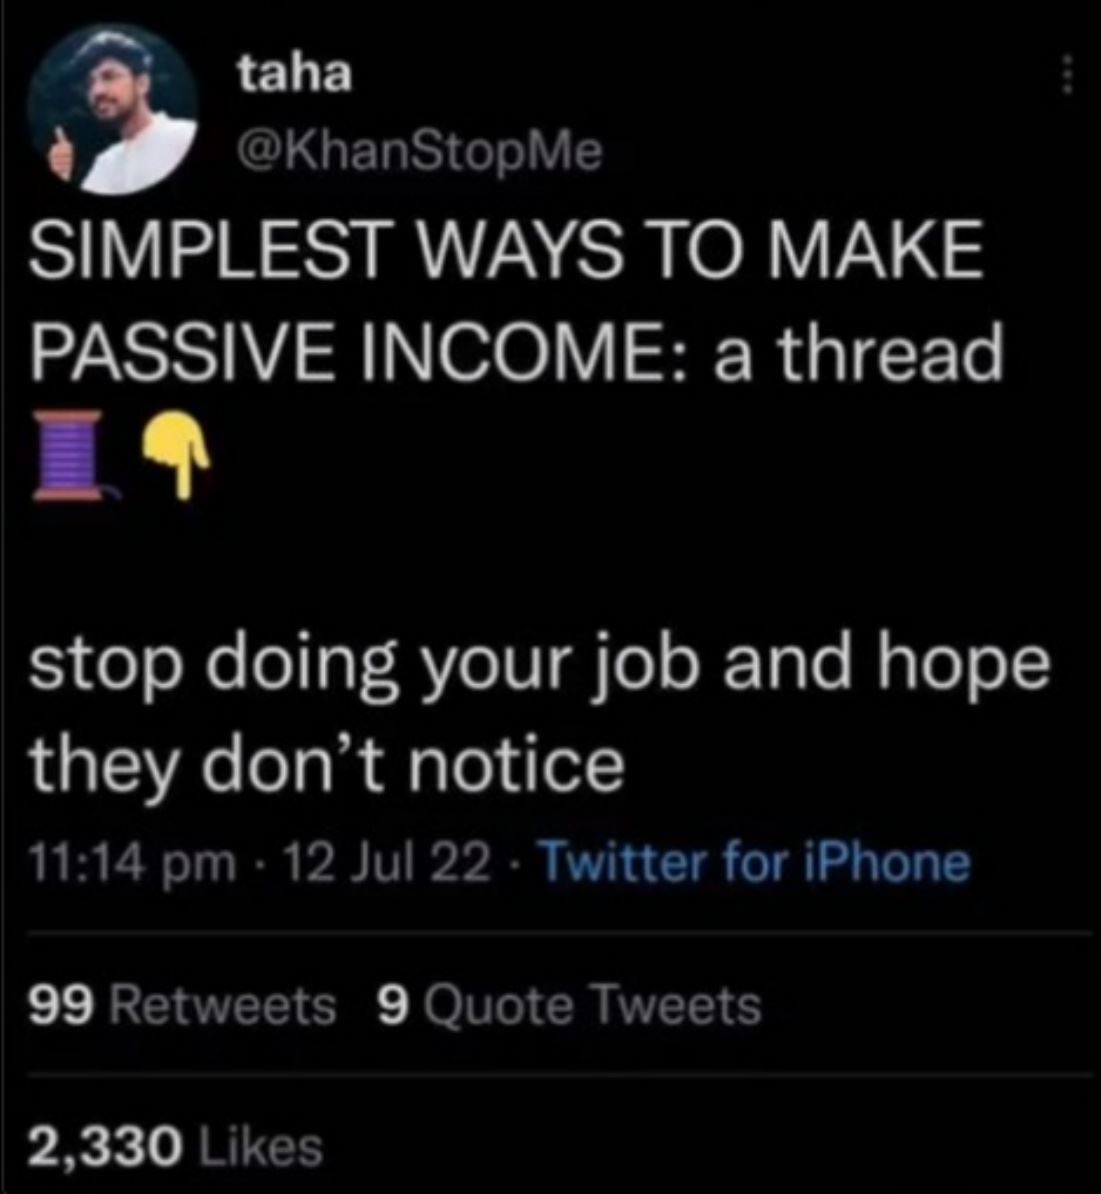 How To Make Passive Income